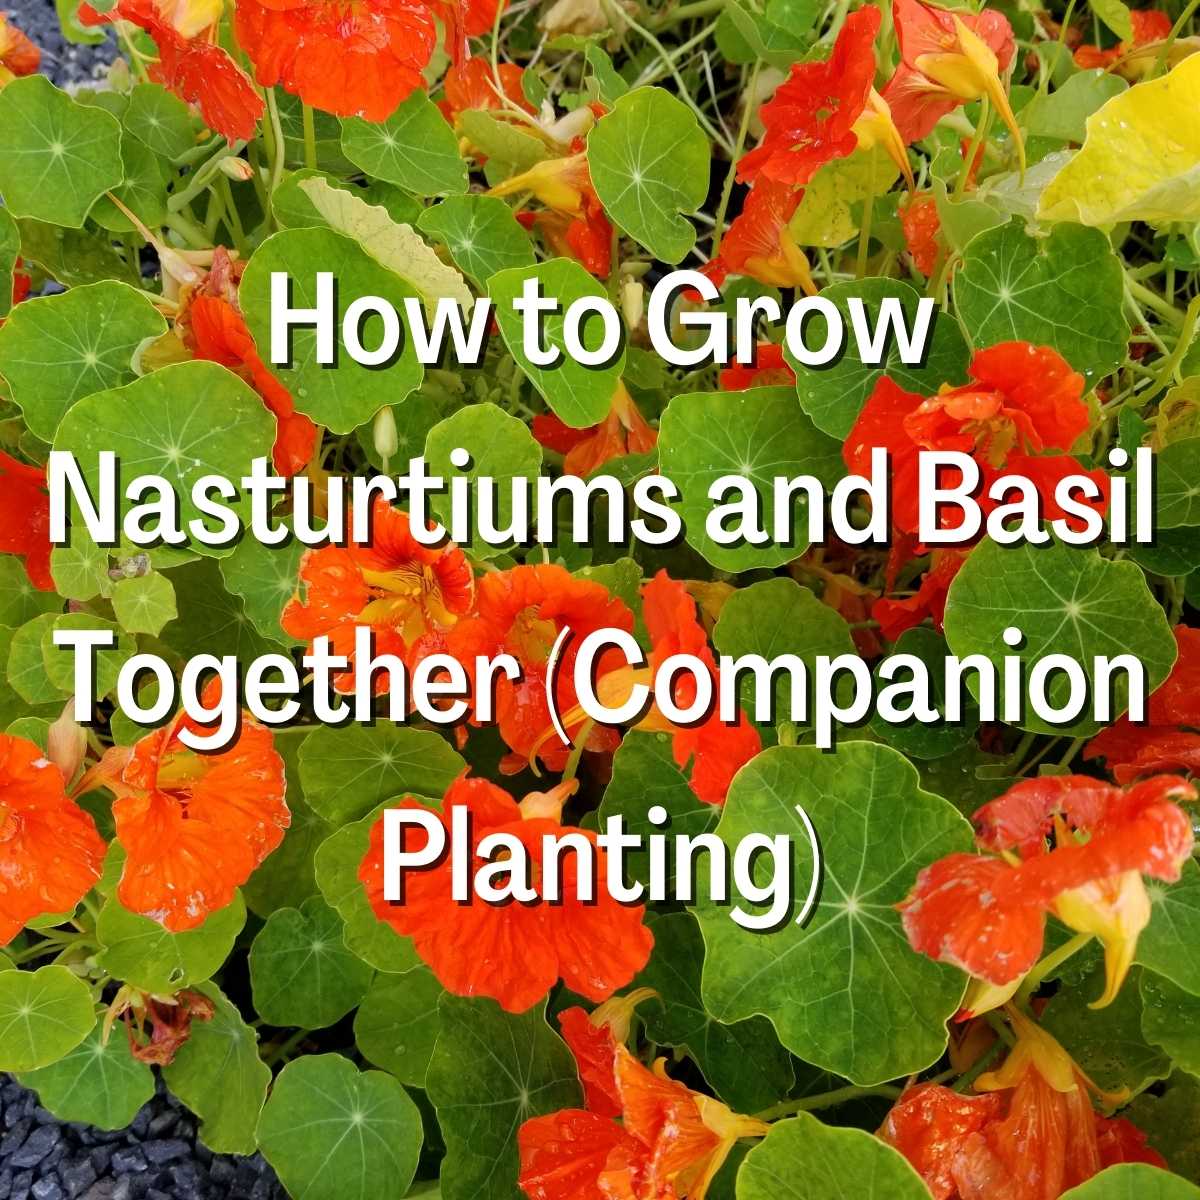 How to Grow Nasturtiums and Basil Together